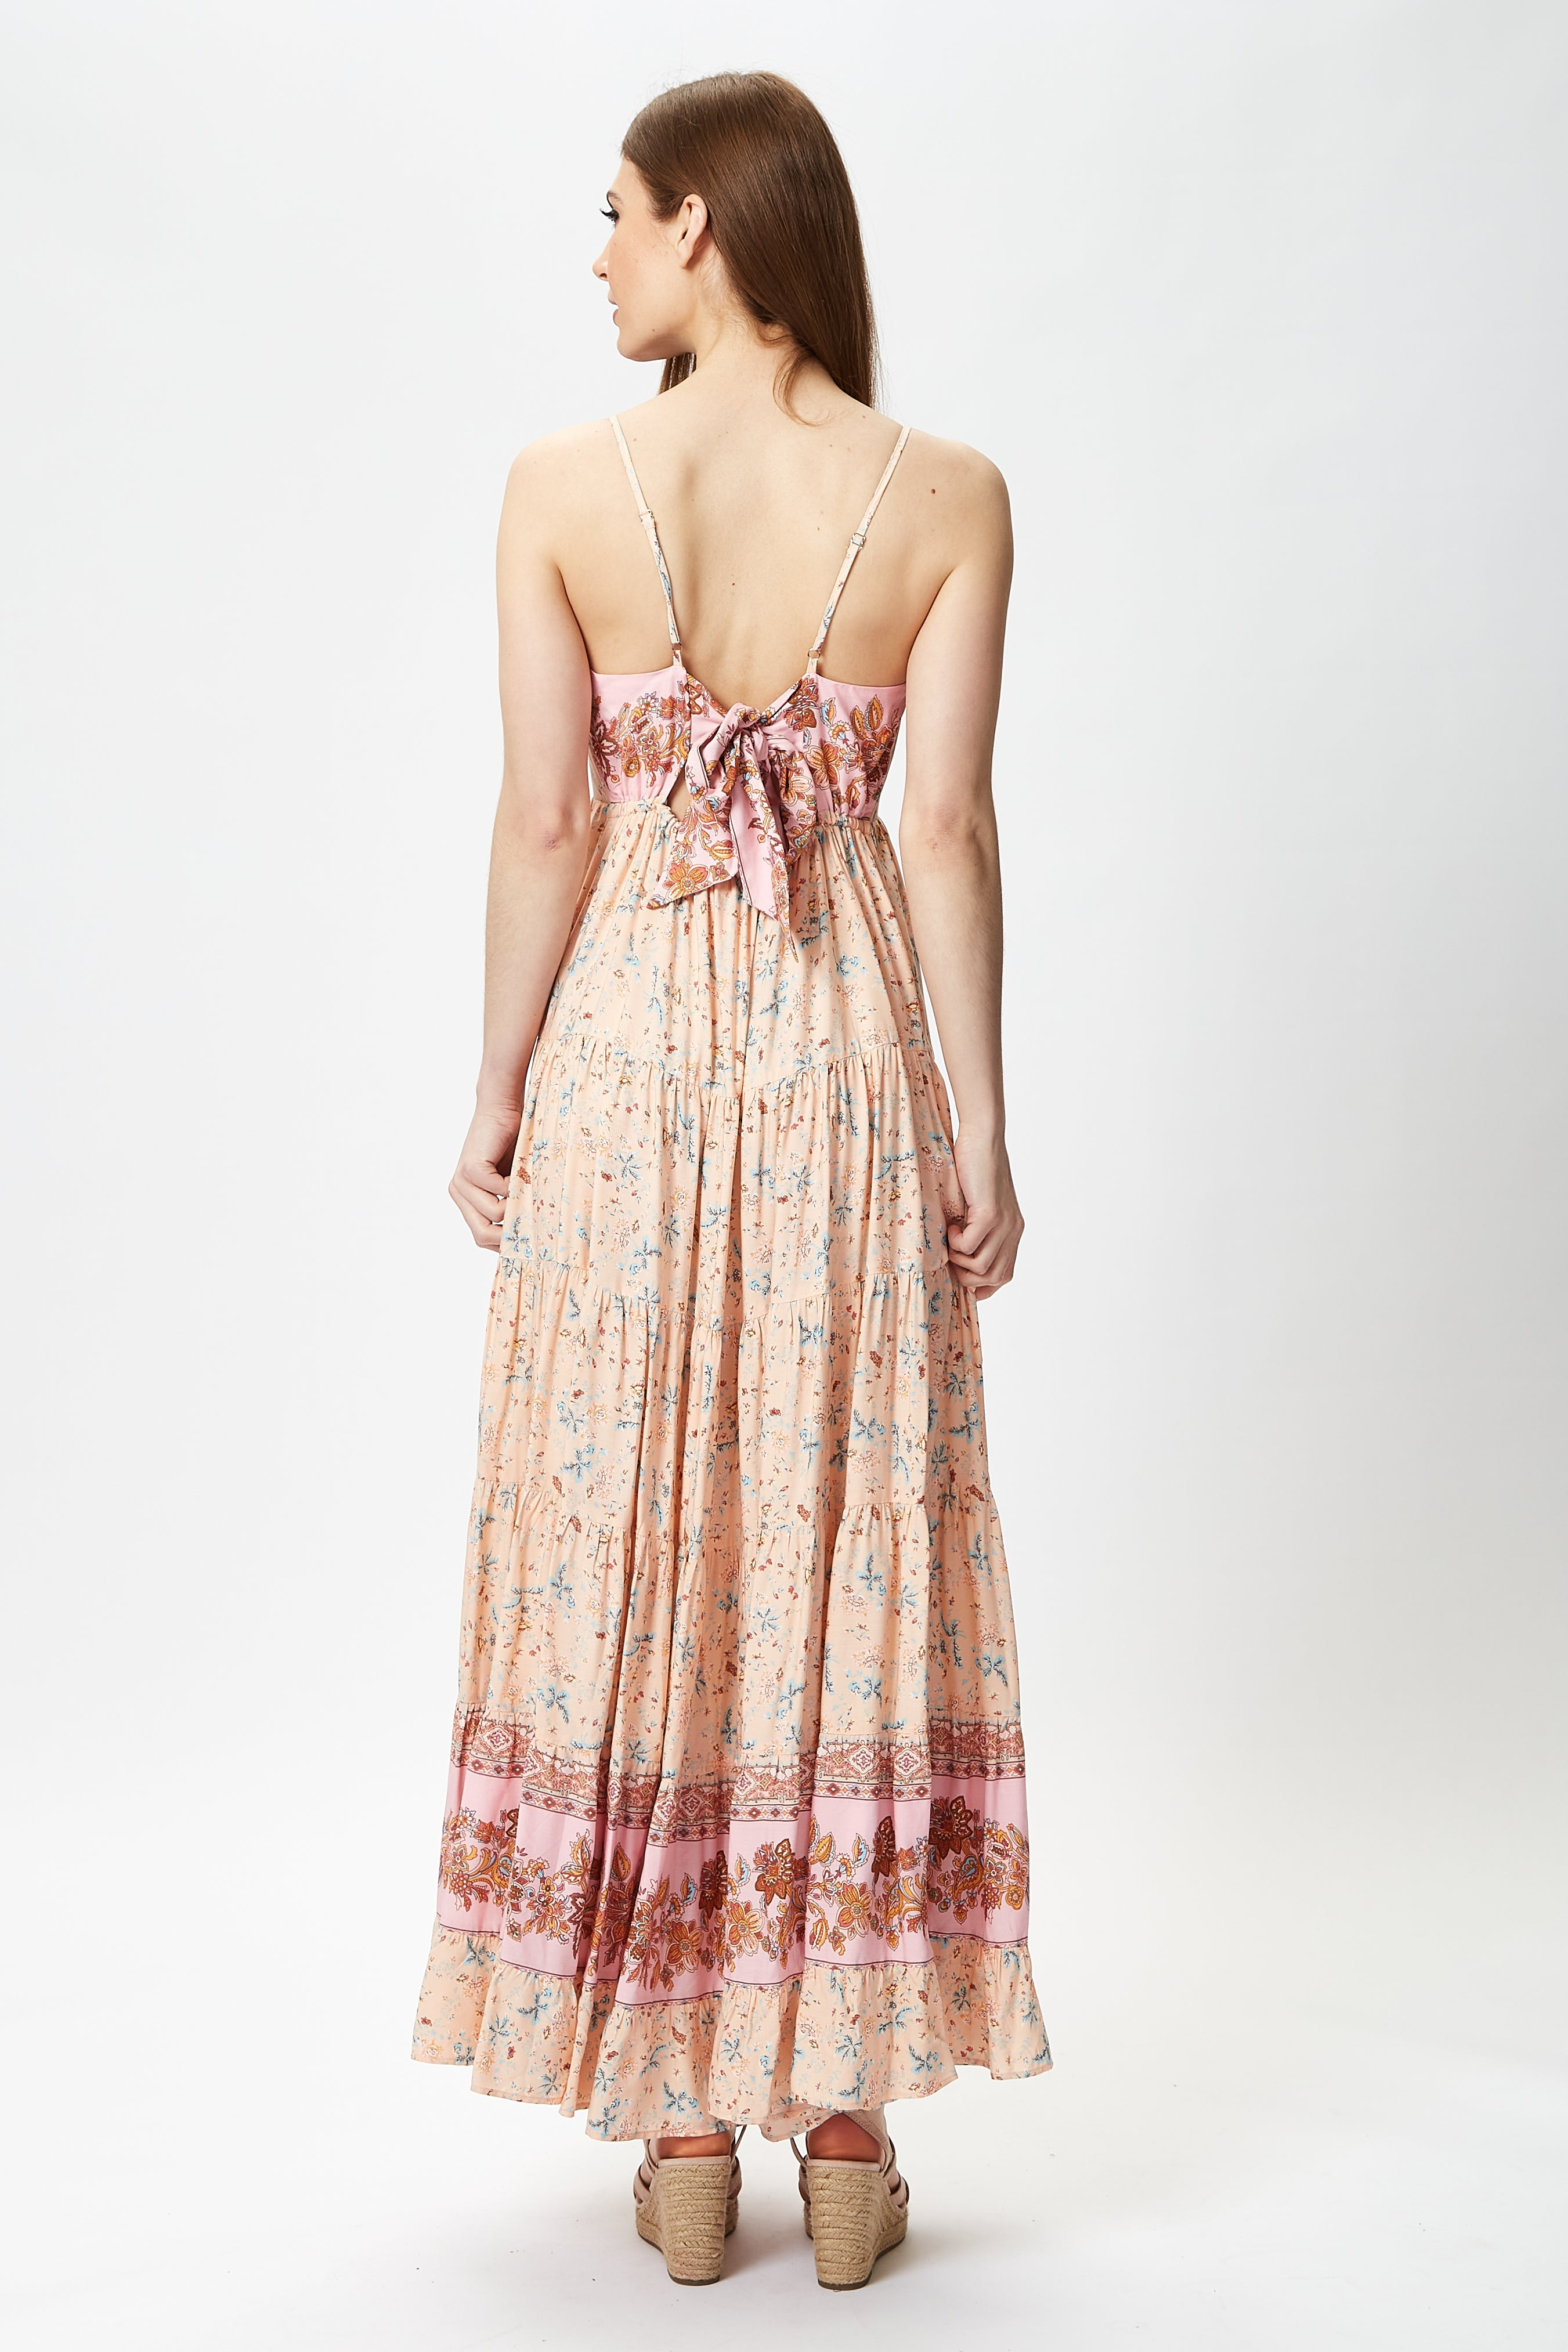 Liquorish Cami Maxi Dress in Nude Floral Print with Tie Back Liquorish